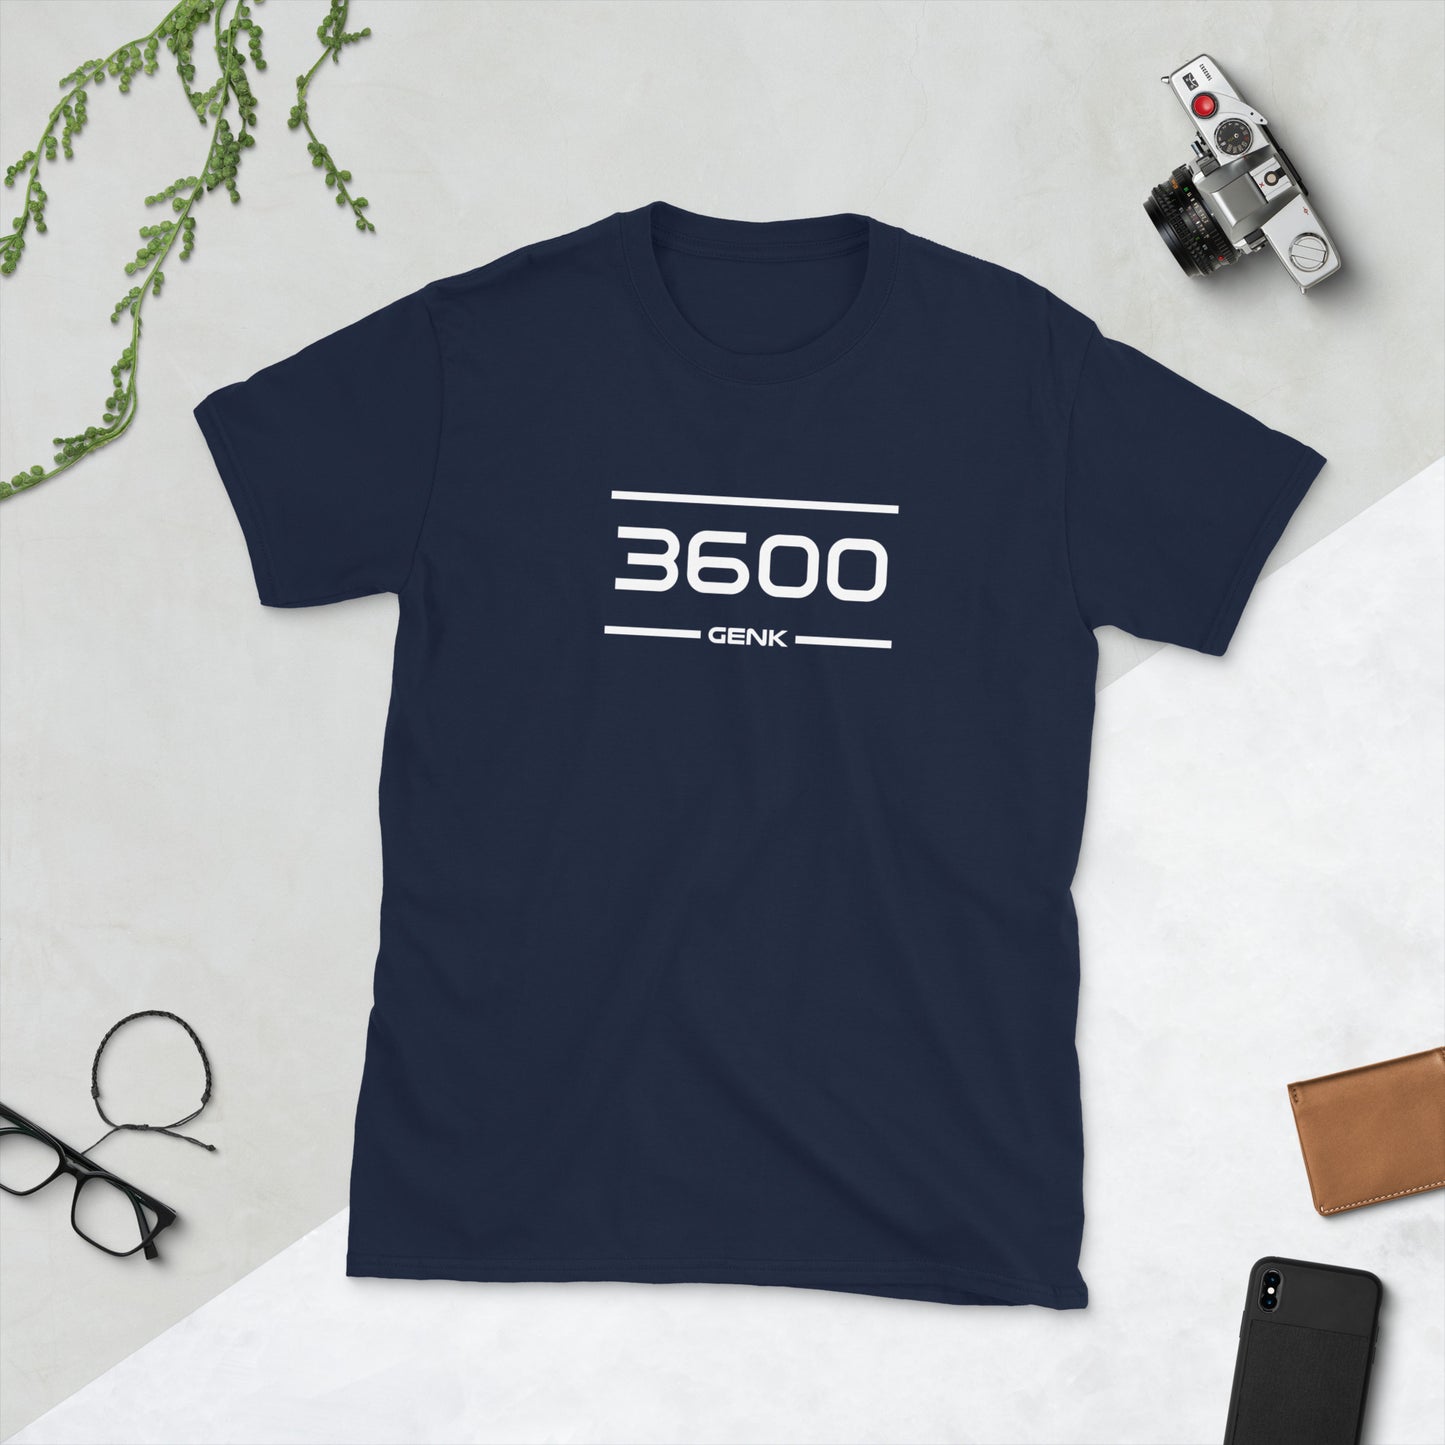 Tshirt - 3600 - Genk